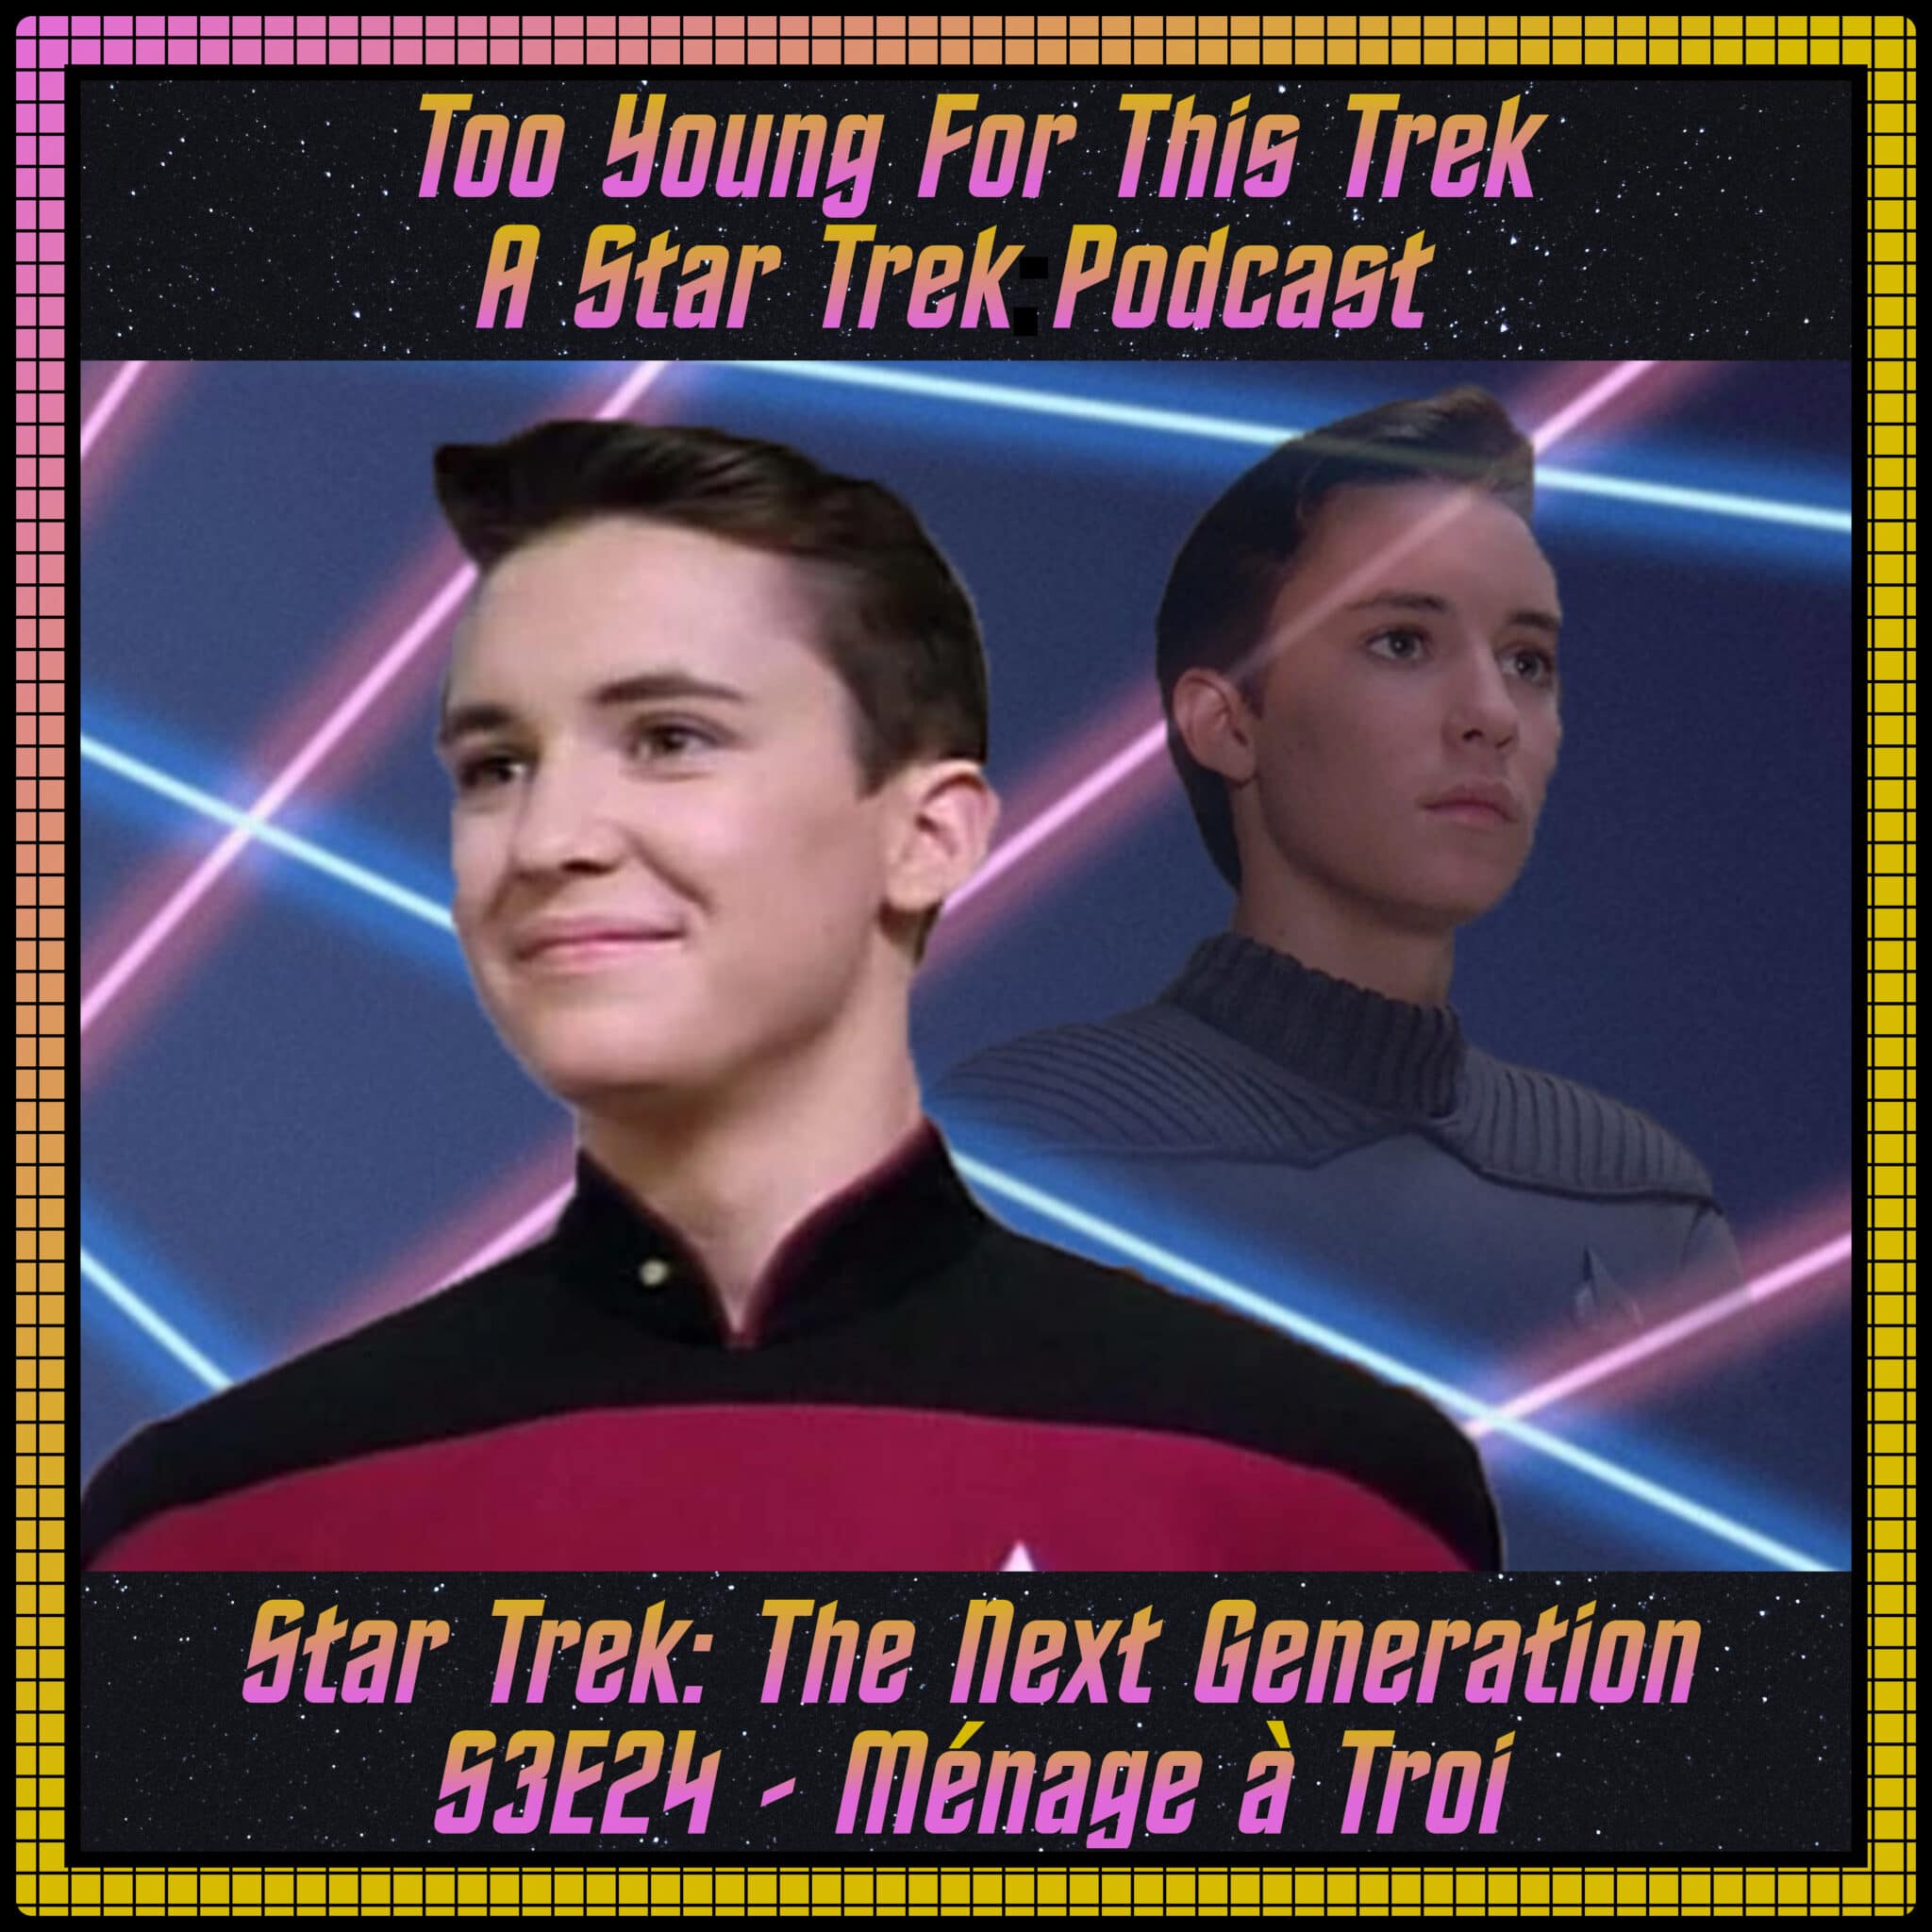 Star Trek: The Next Generation S3E24 - Ménage à Troi